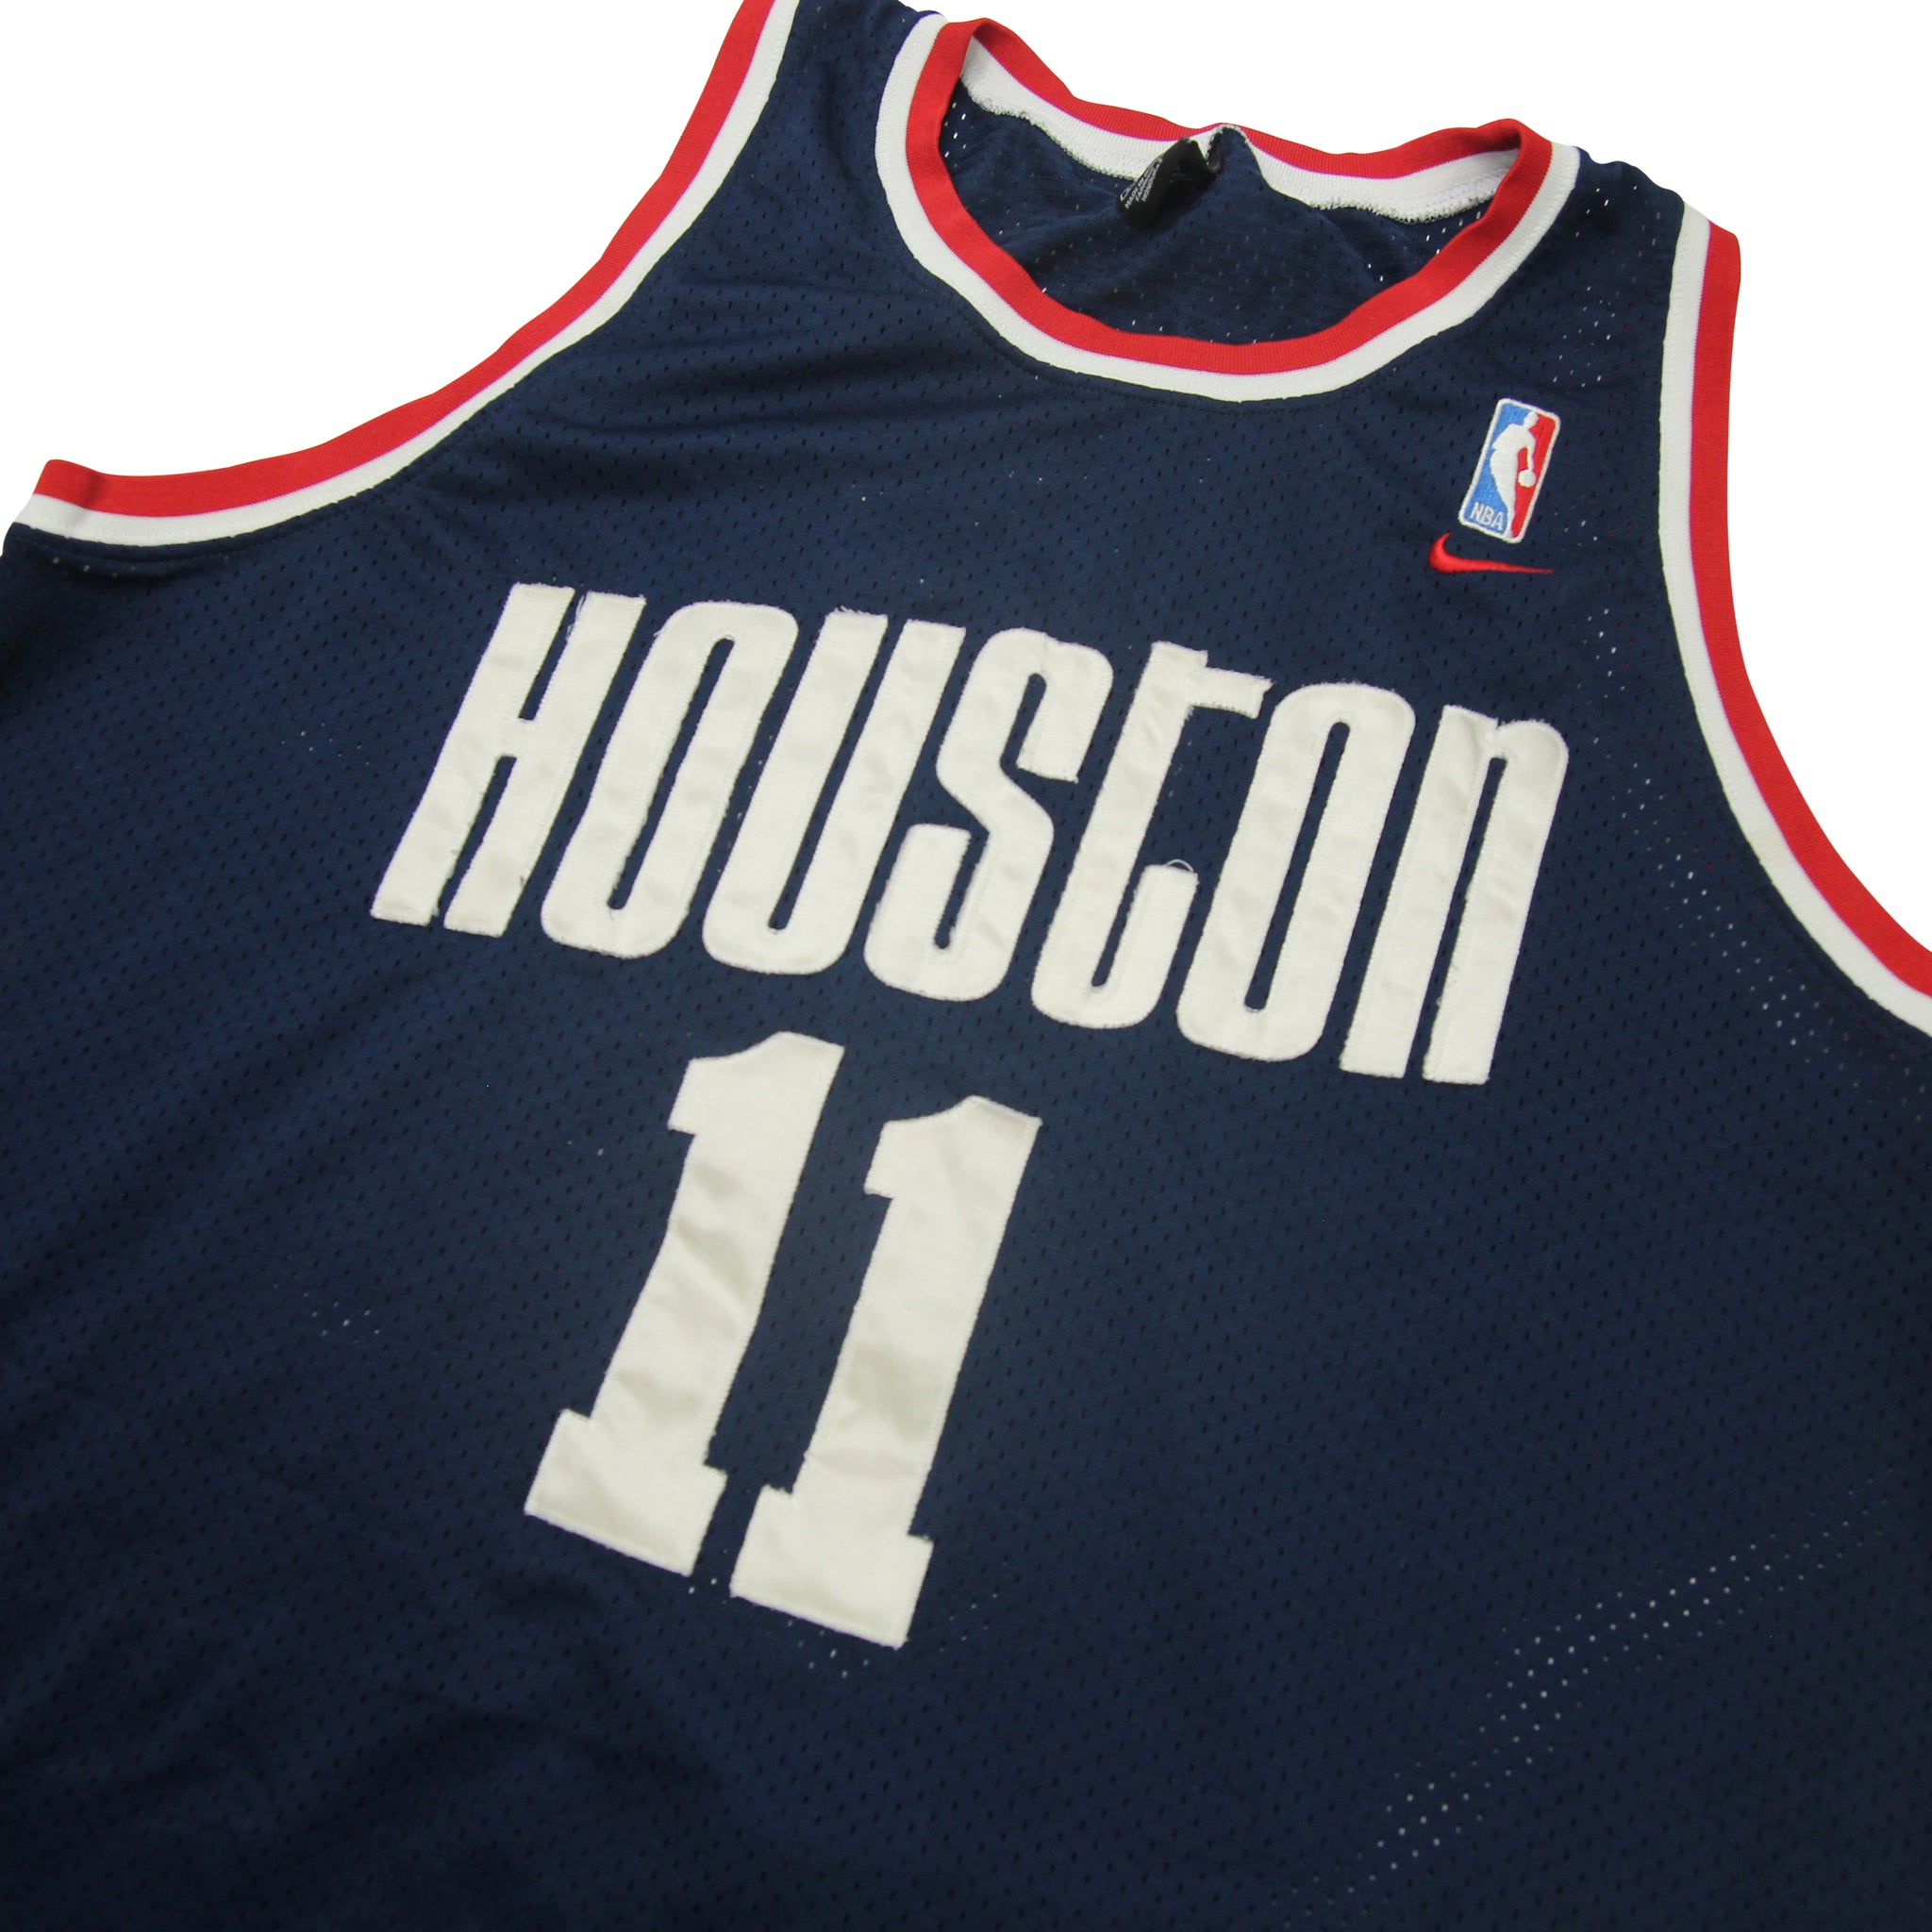 Yao Ming #11 - Houston Rockets Nike Rewind Jersey - Men's Medium